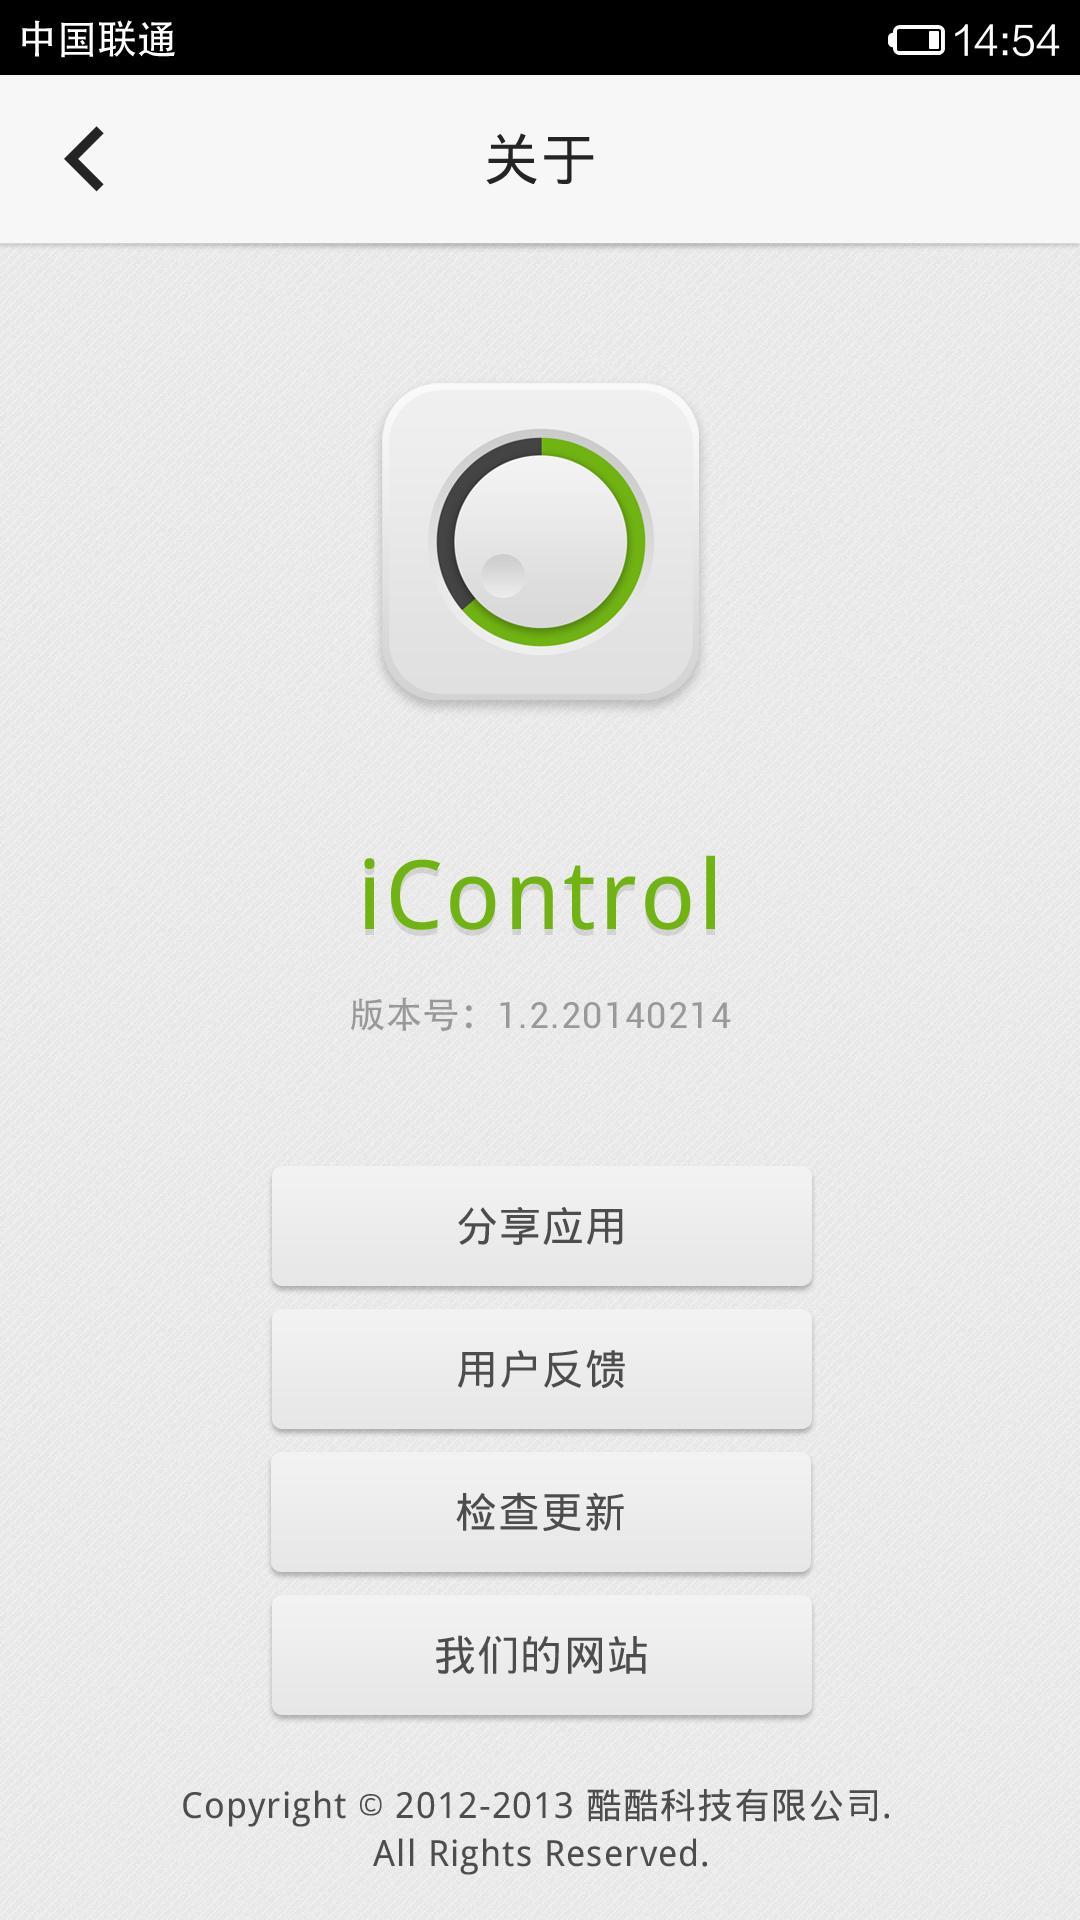 Compulite - iControl App - Welcome to Compulite's Website